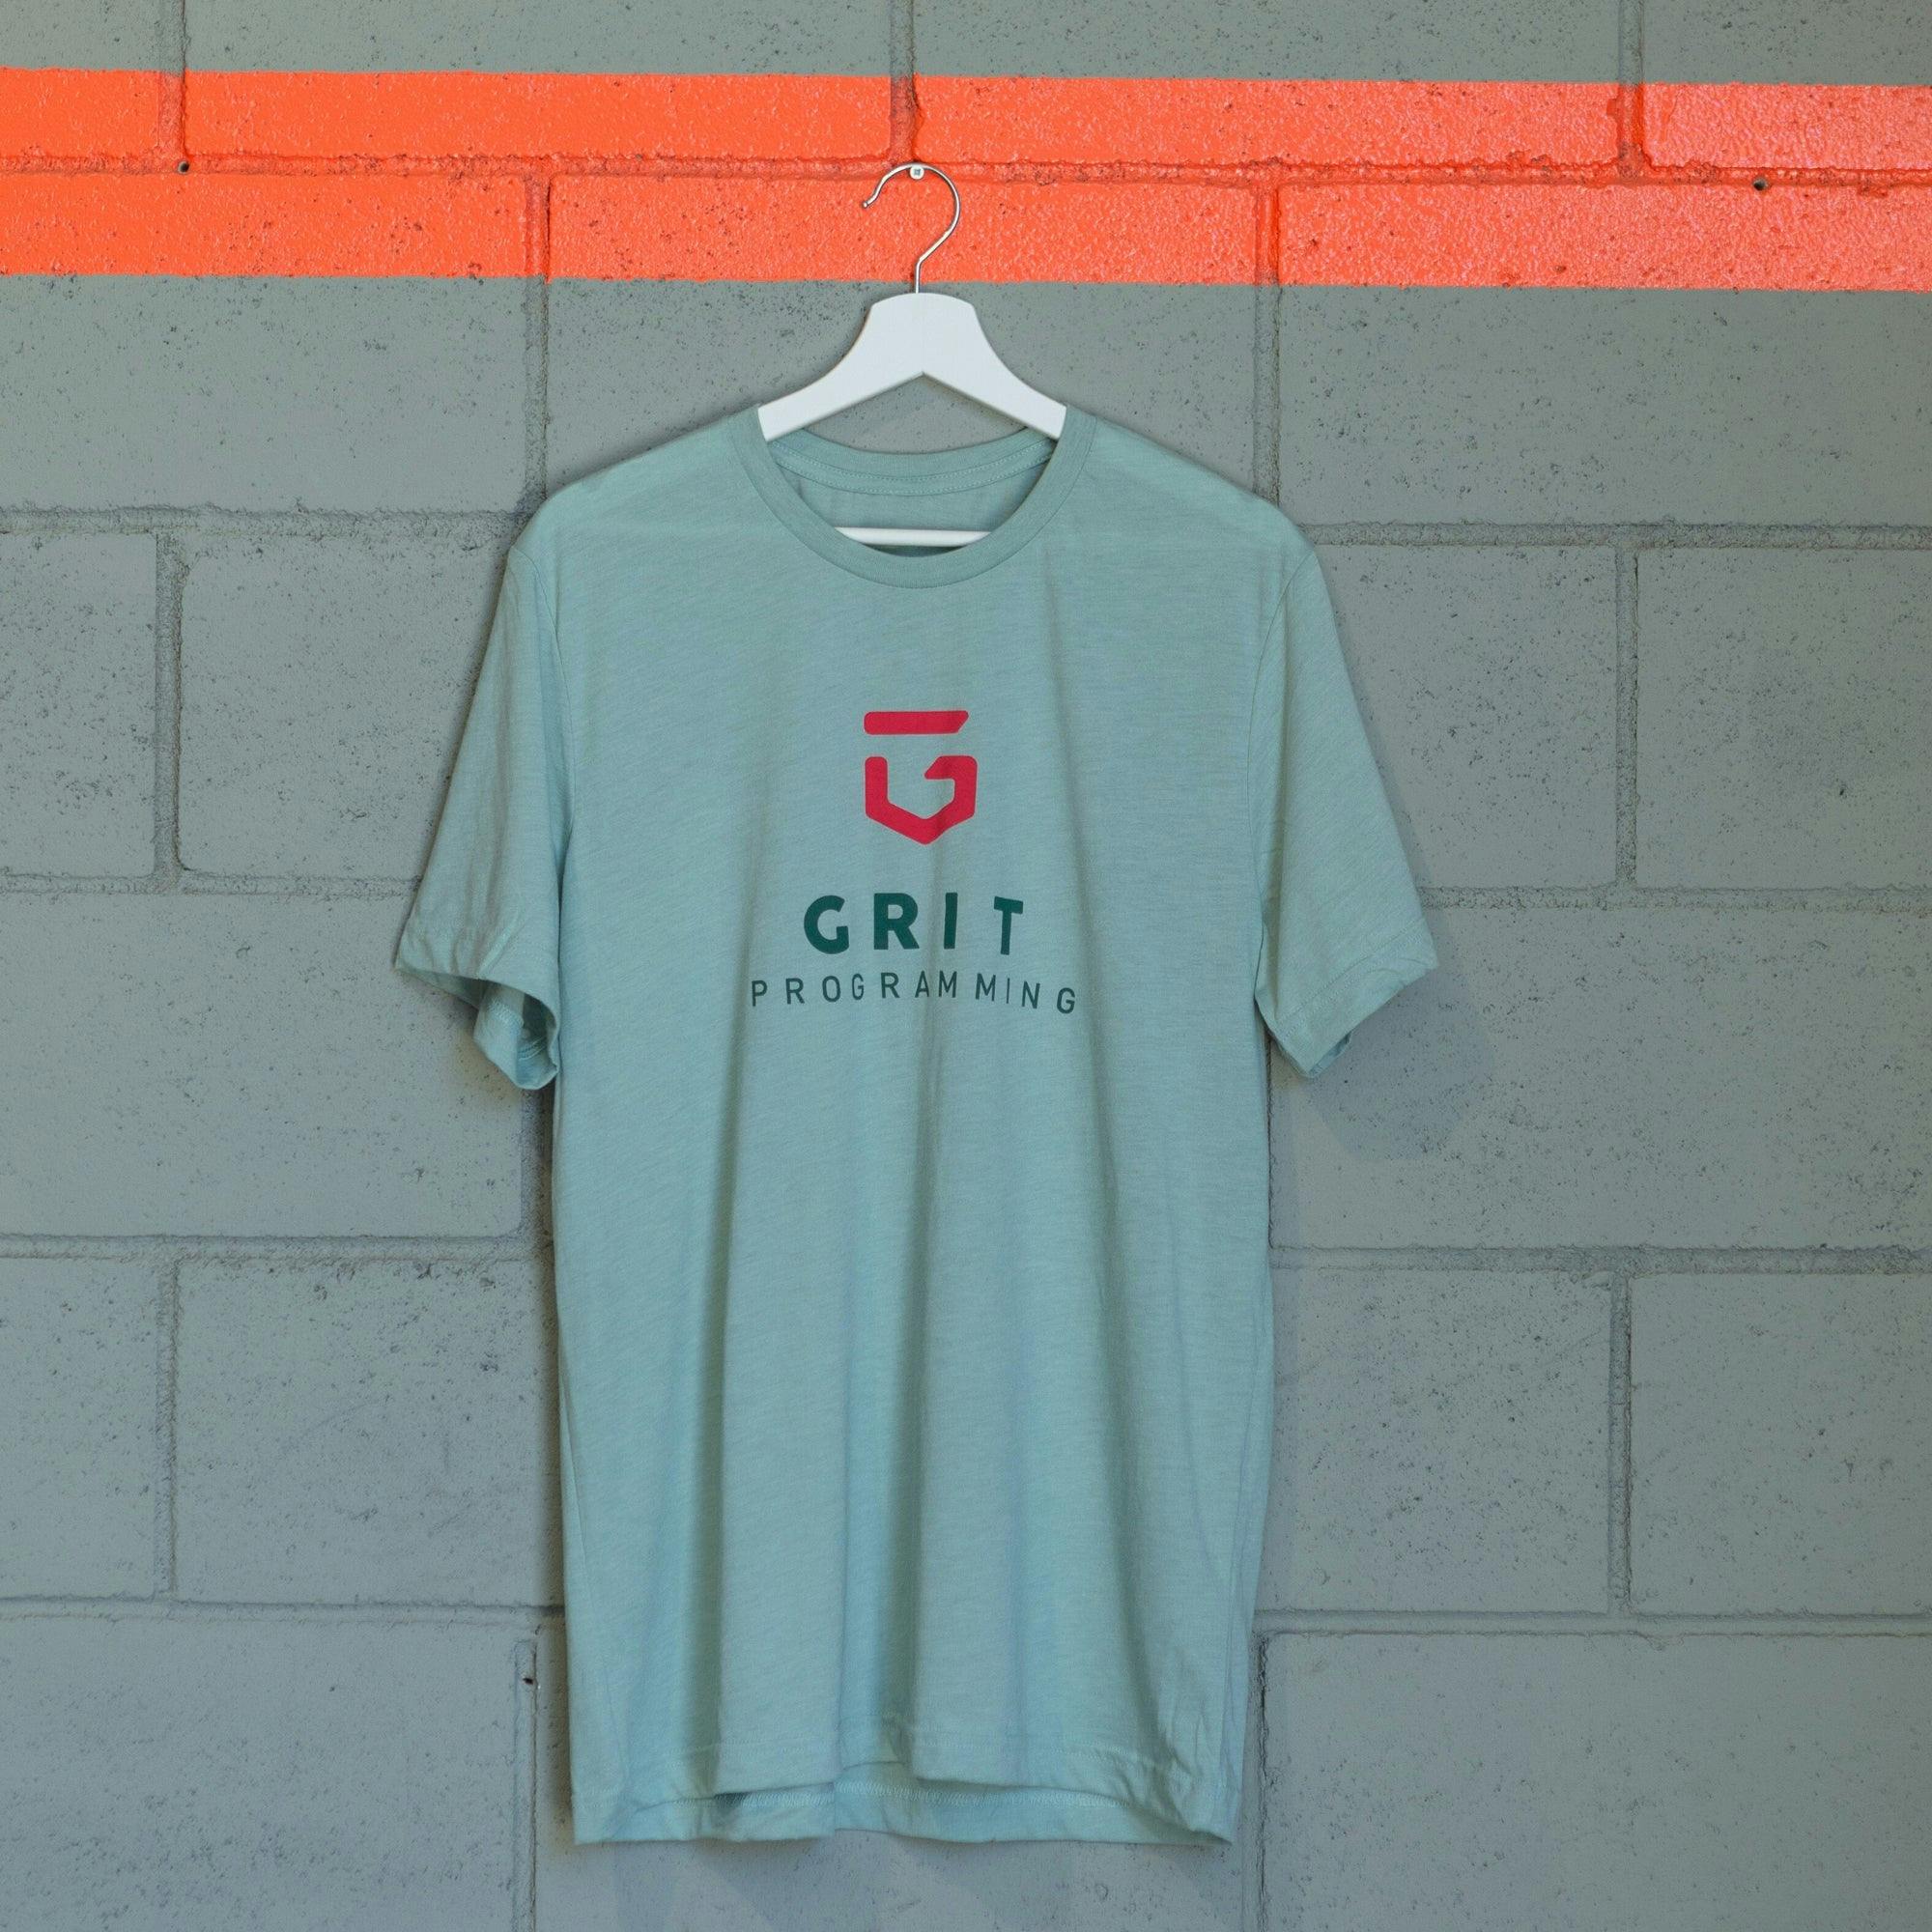 Camiseta GRIT Programming CrossFit 08019 verde clara